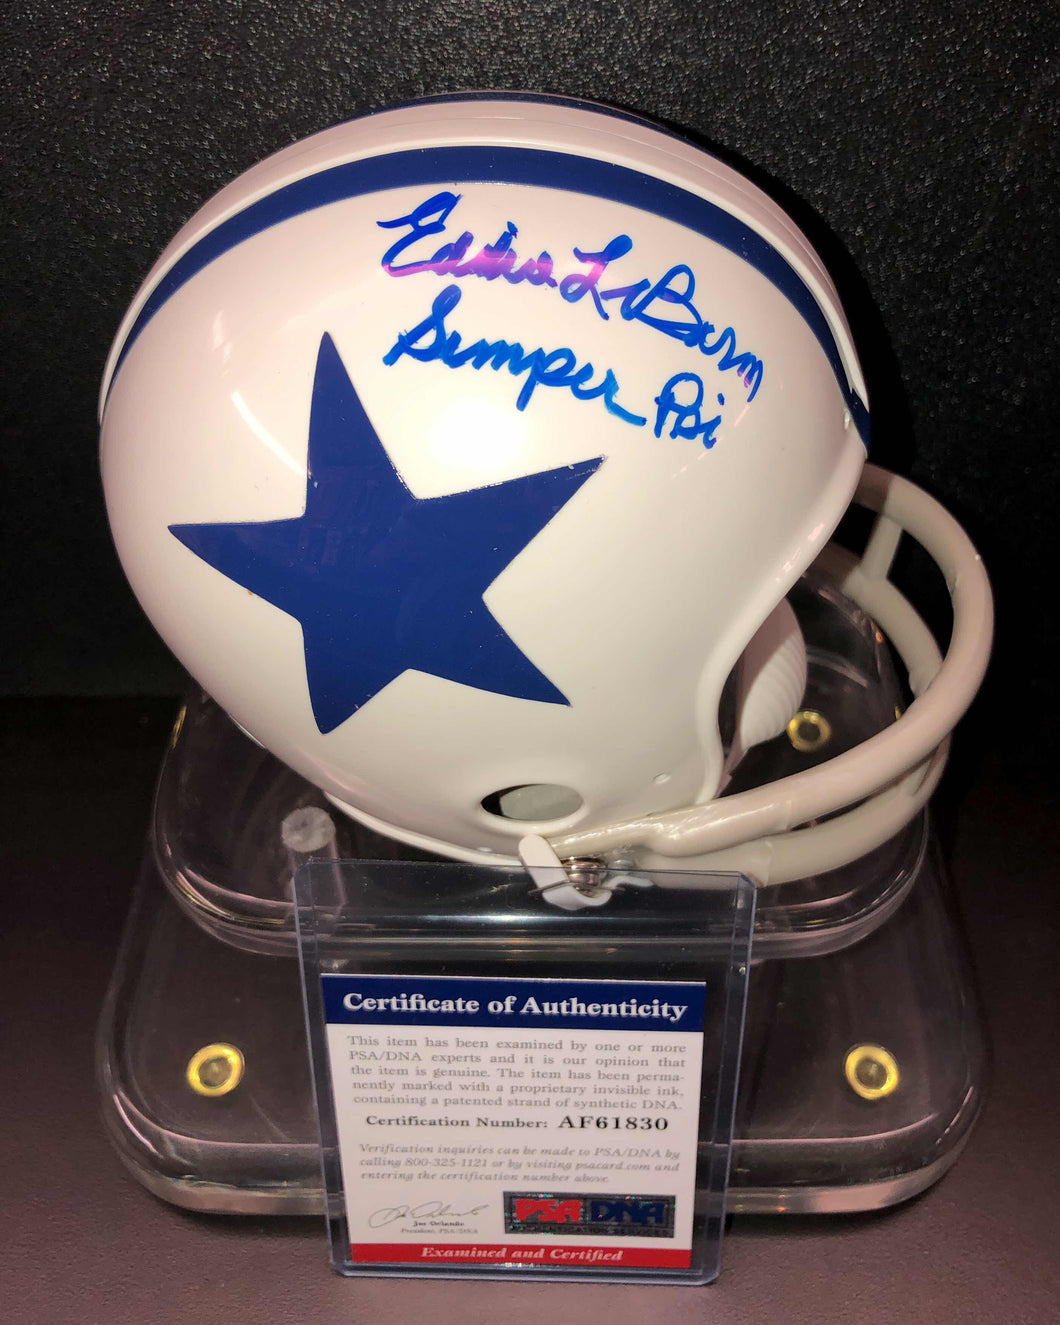 Eddie LeBaron Signed Dallas Cowboys Mini Helmet PSA/DNA Authentication Services Certified